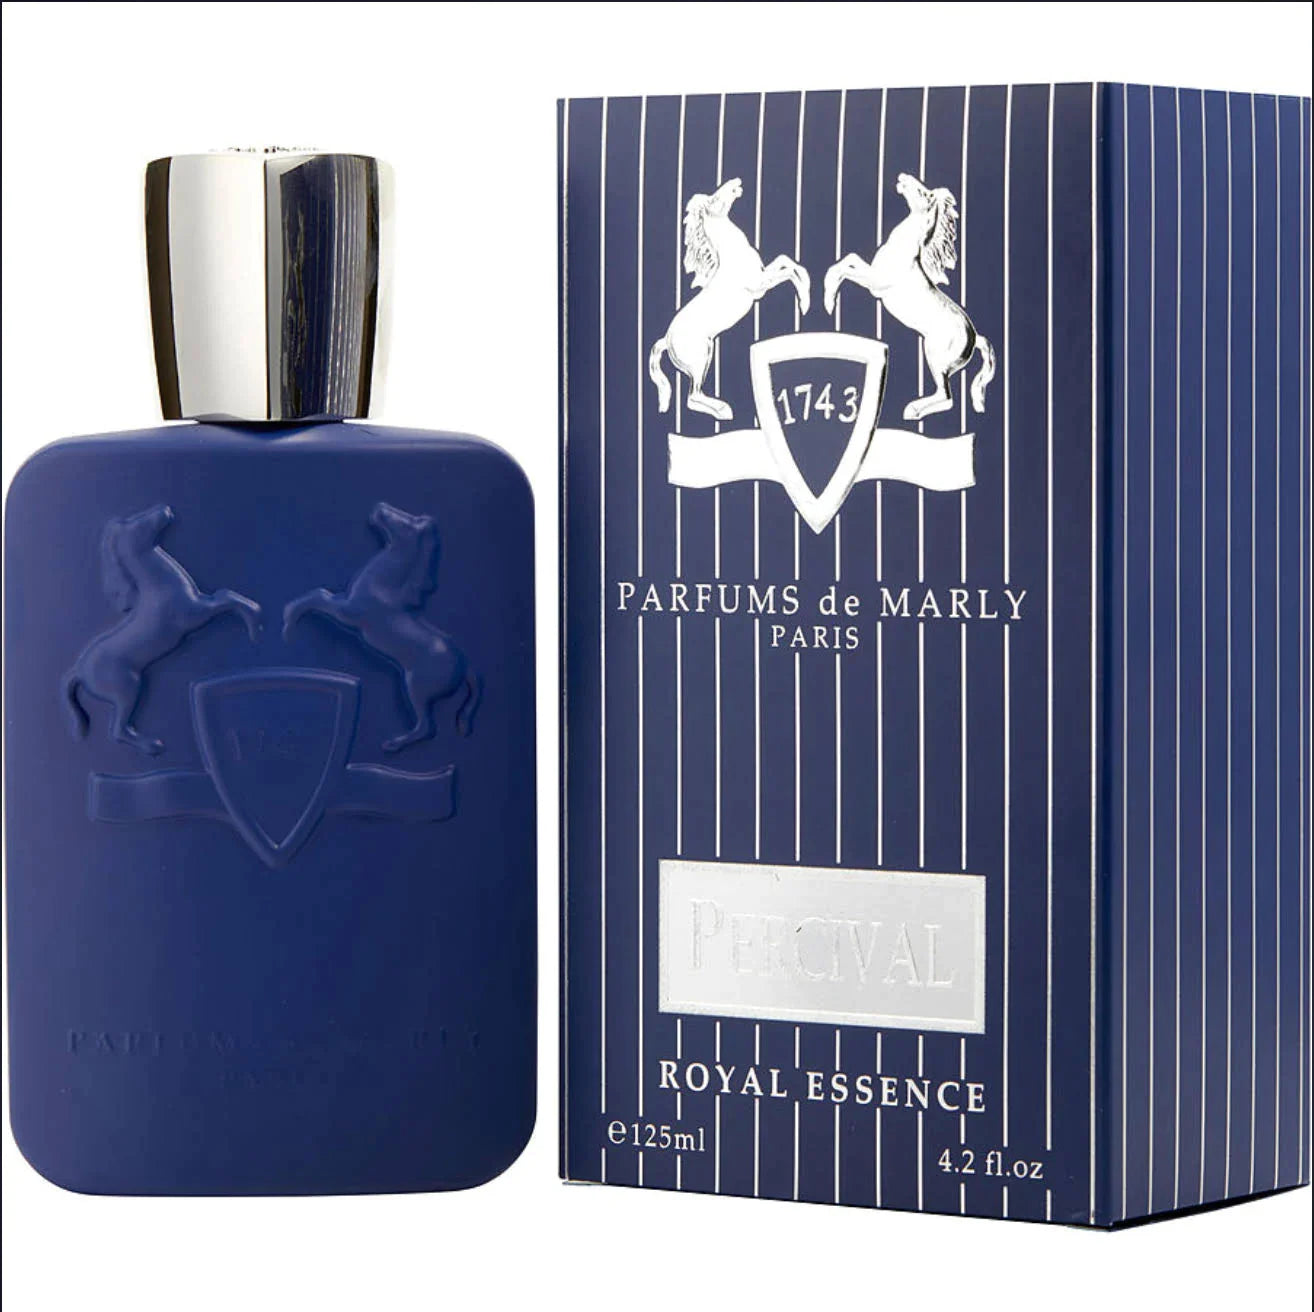 Percival Parfums de Marly